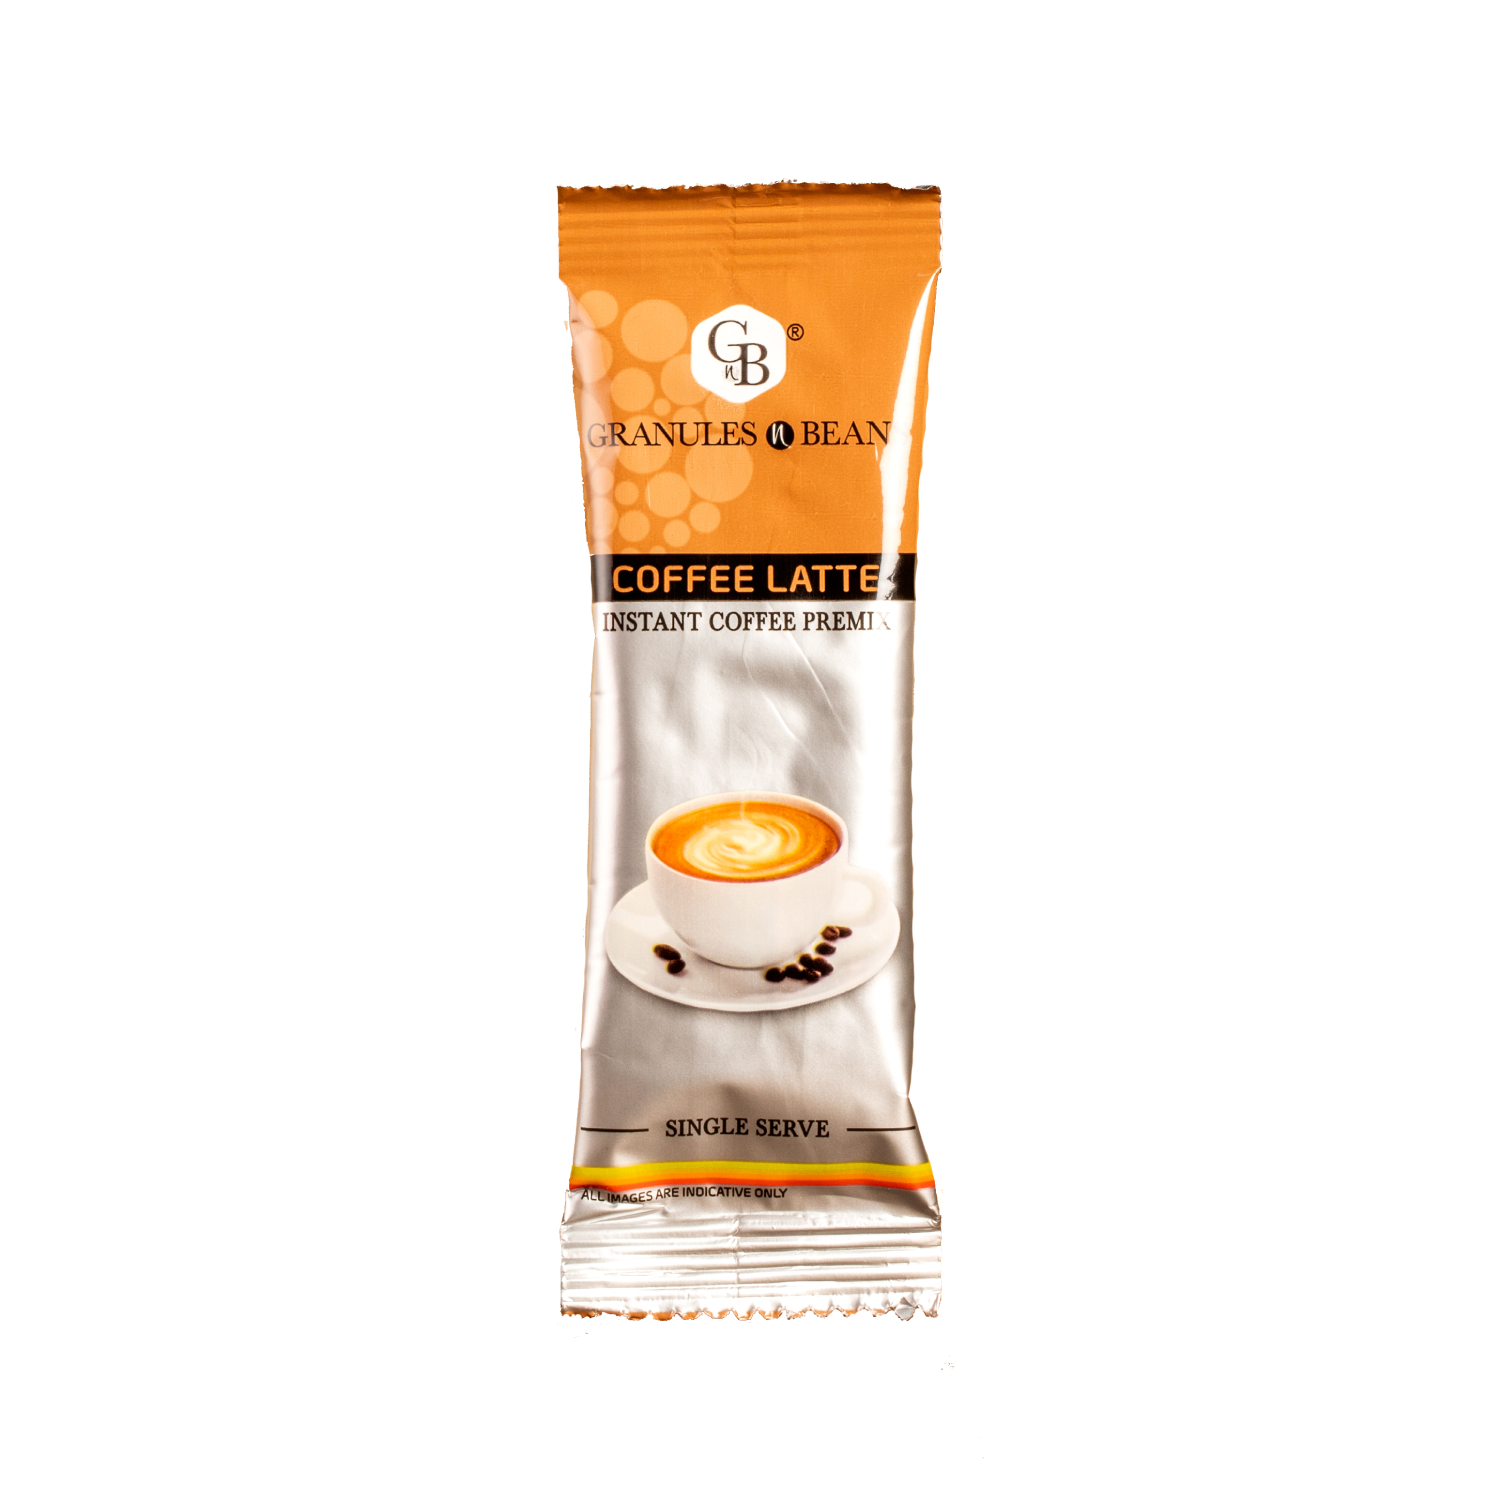 Granules n Beans Instant Premix Coffee Latte - (50 Single Serv Sachets)